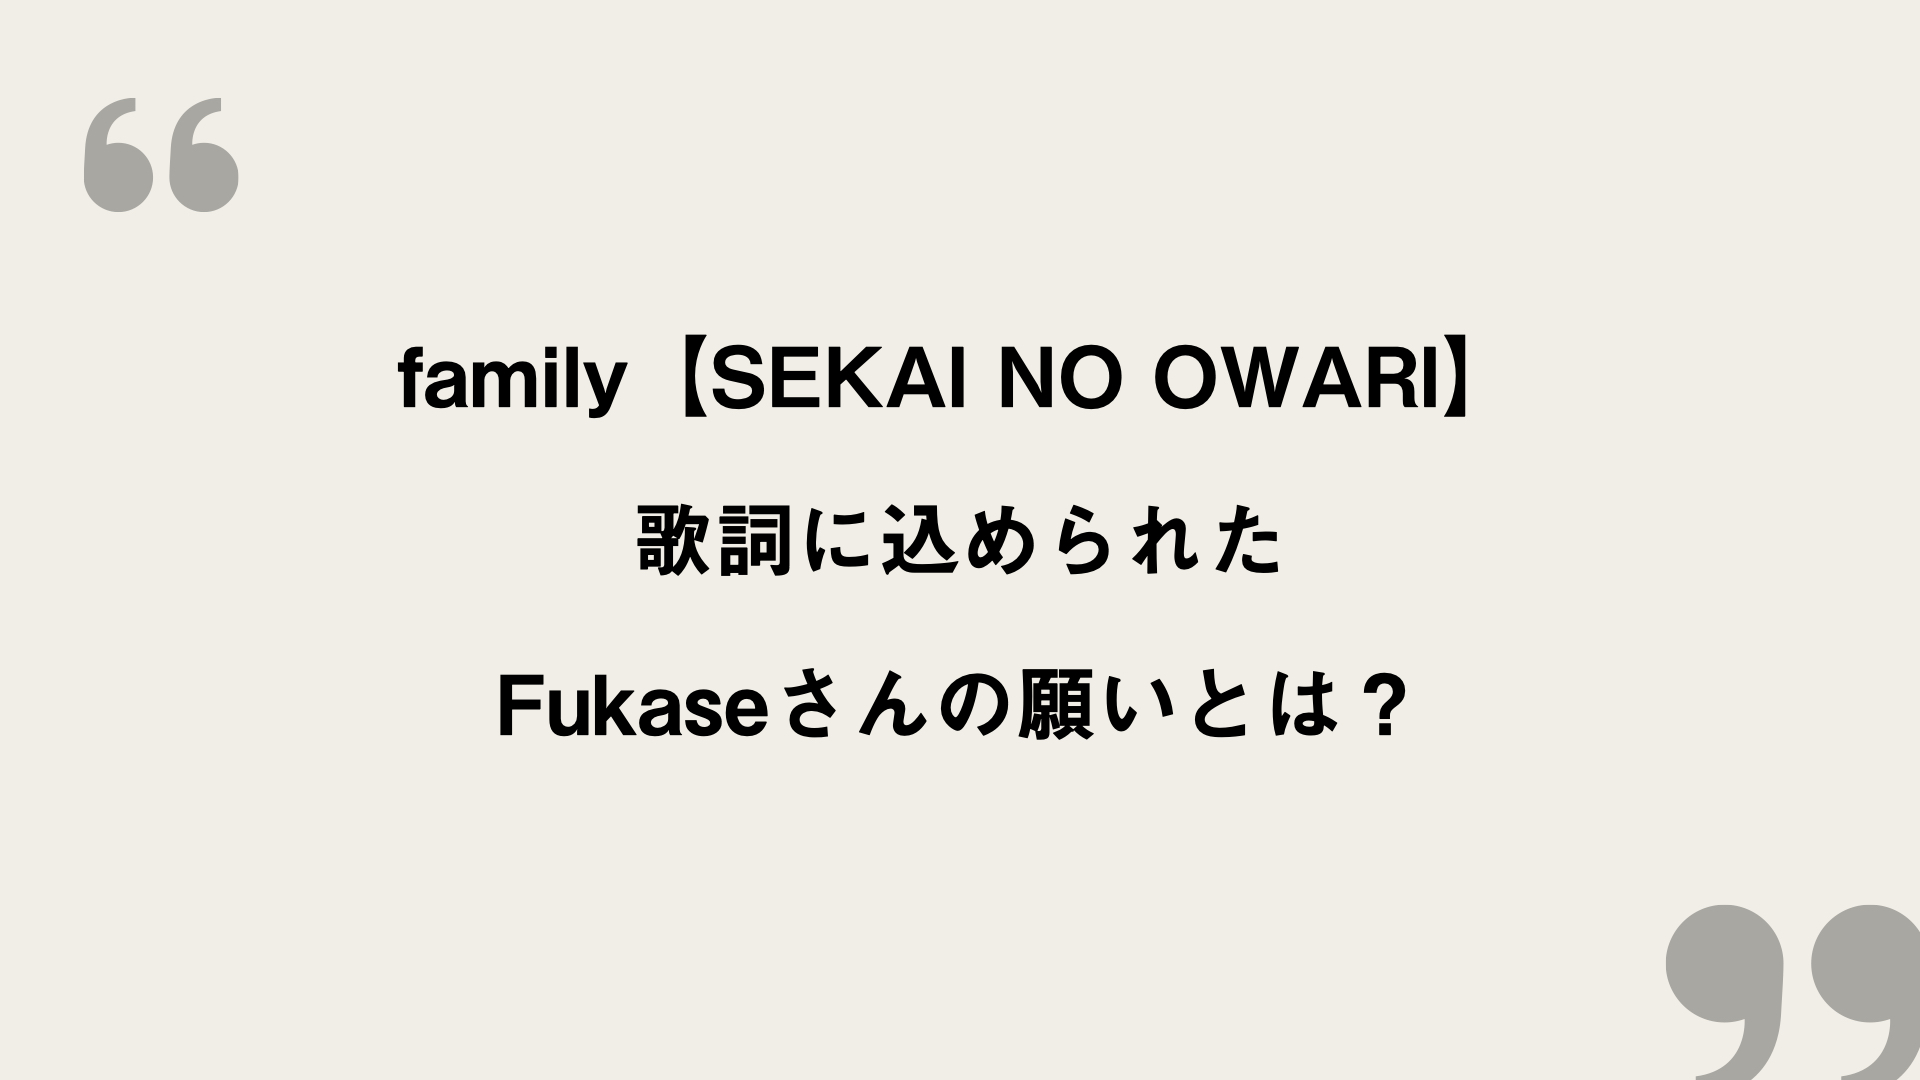 Family Sekai No Owari 歌詞の意味を考察 歌詞に込められたfukaseさんの願いとは Framu Media